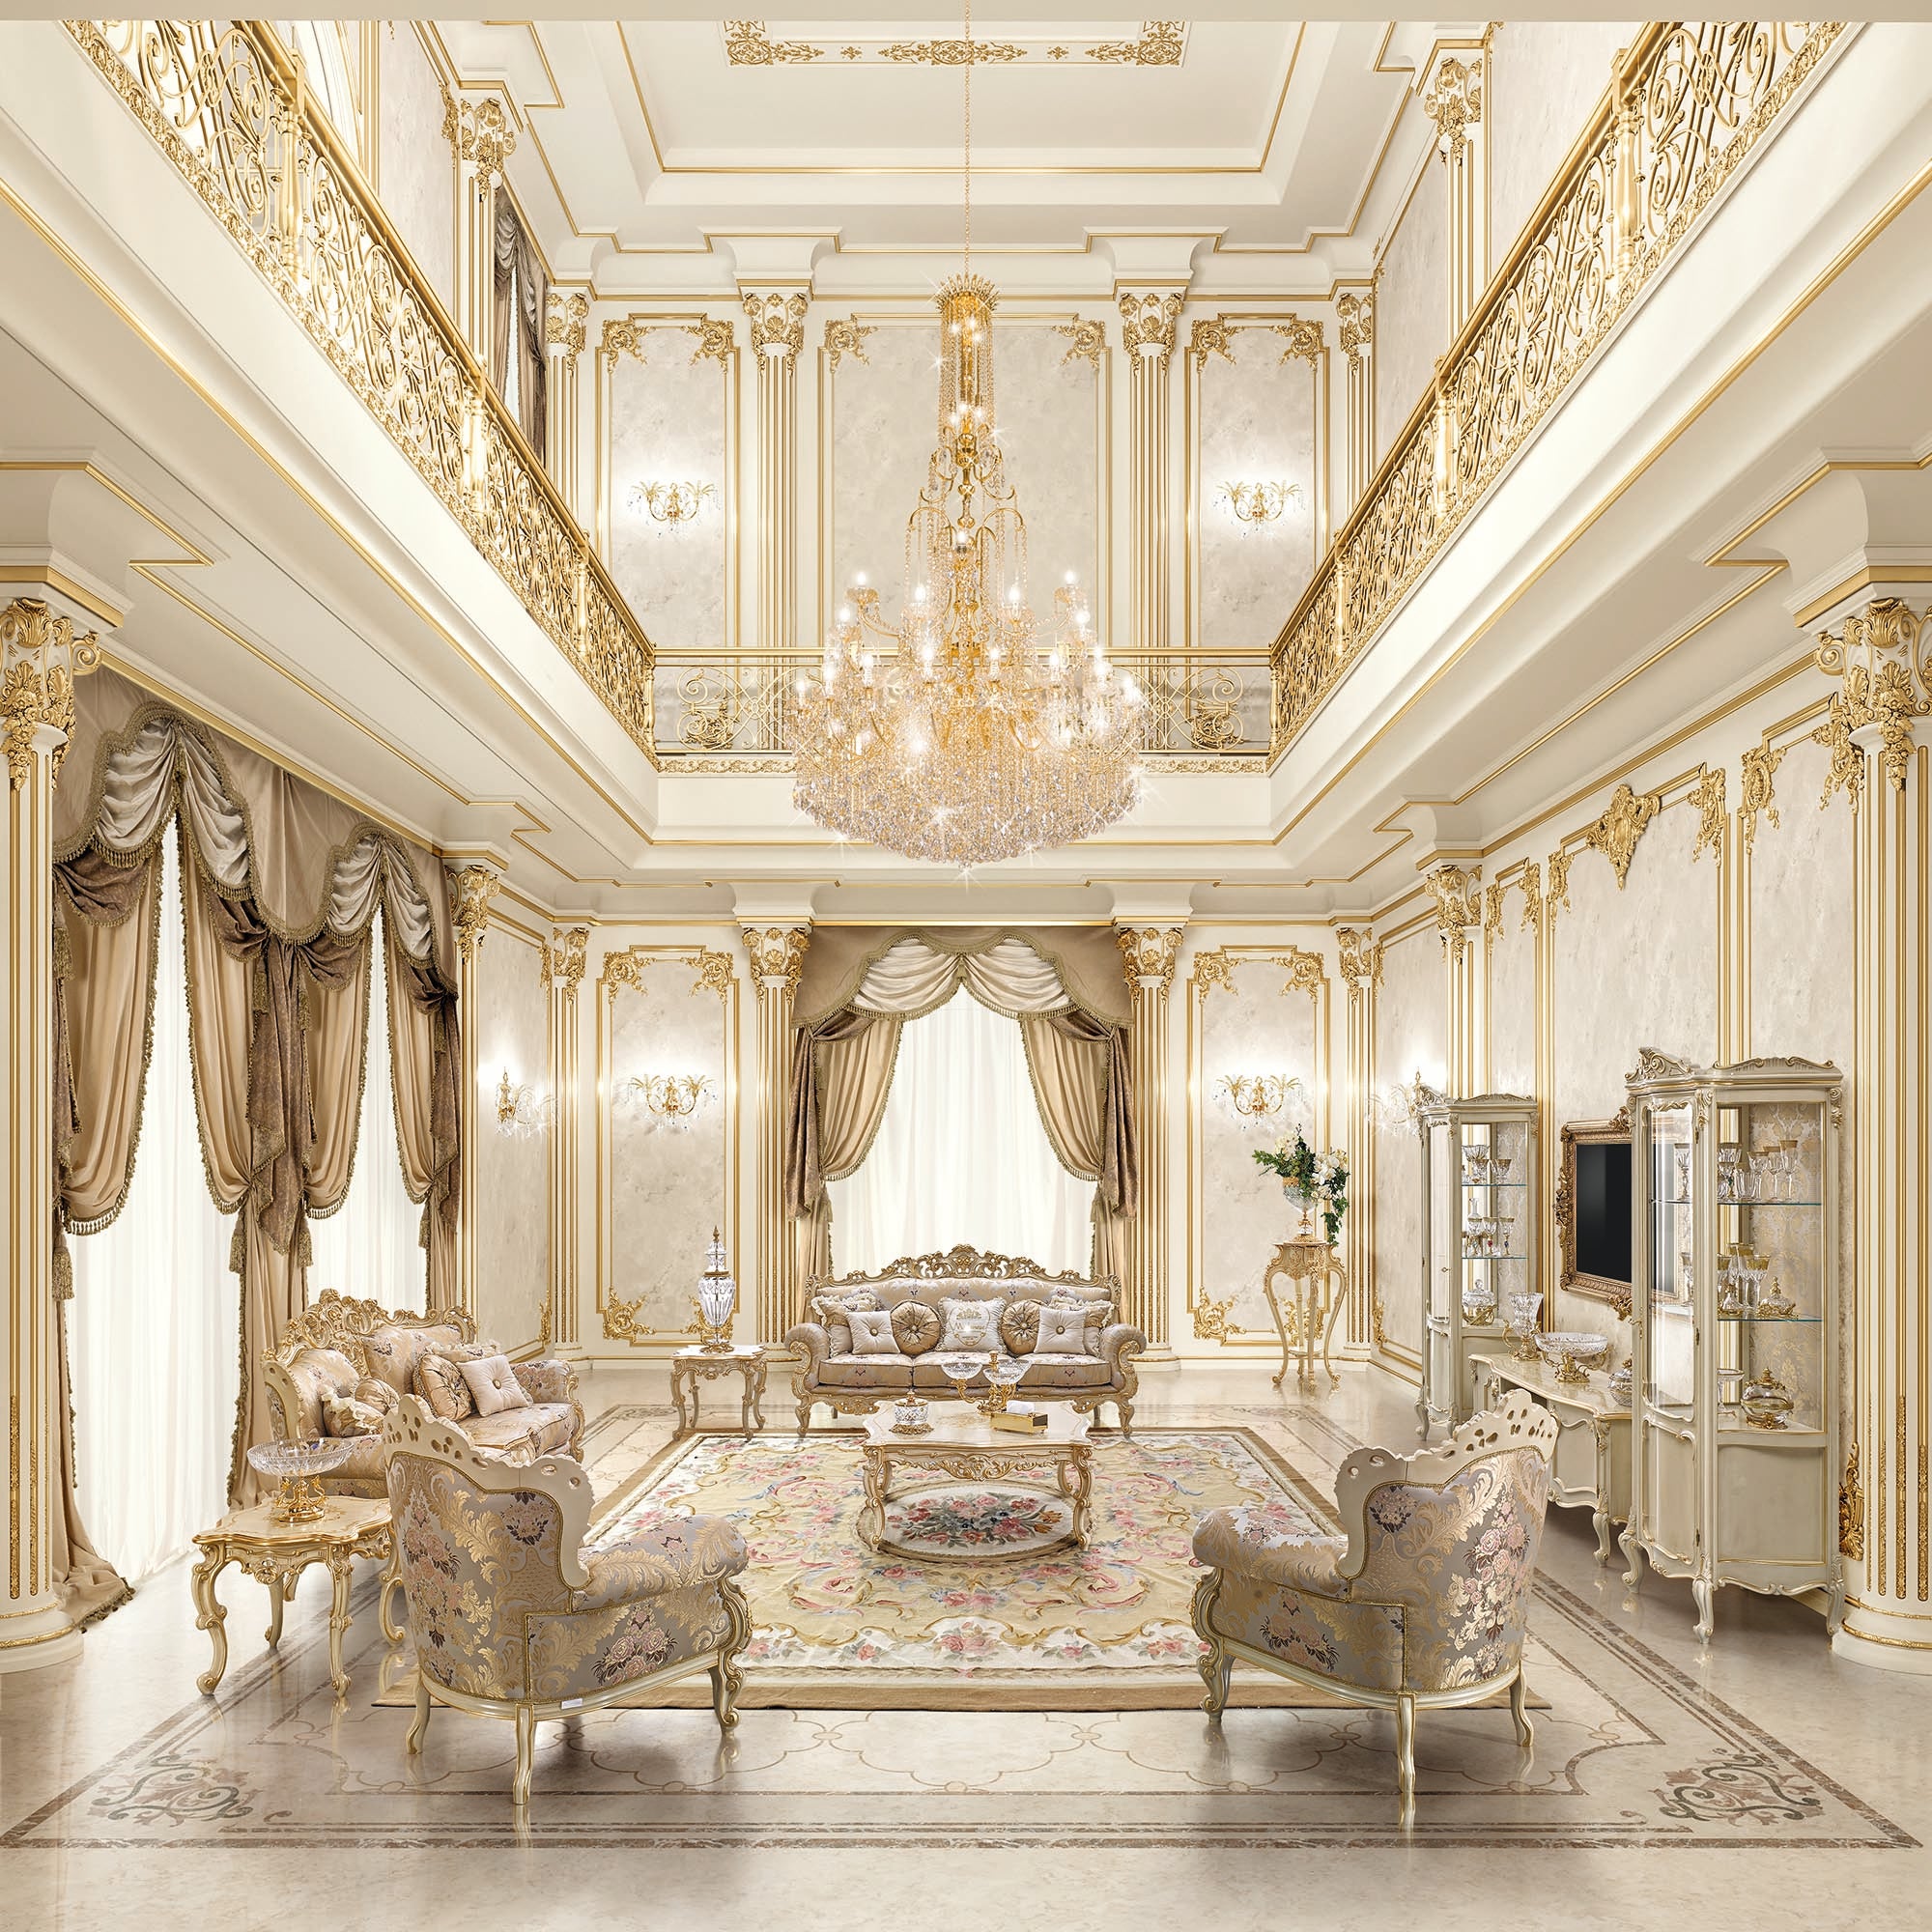 Luxurious Majilis Decor: Where Elegance Meets Cultural Heritage